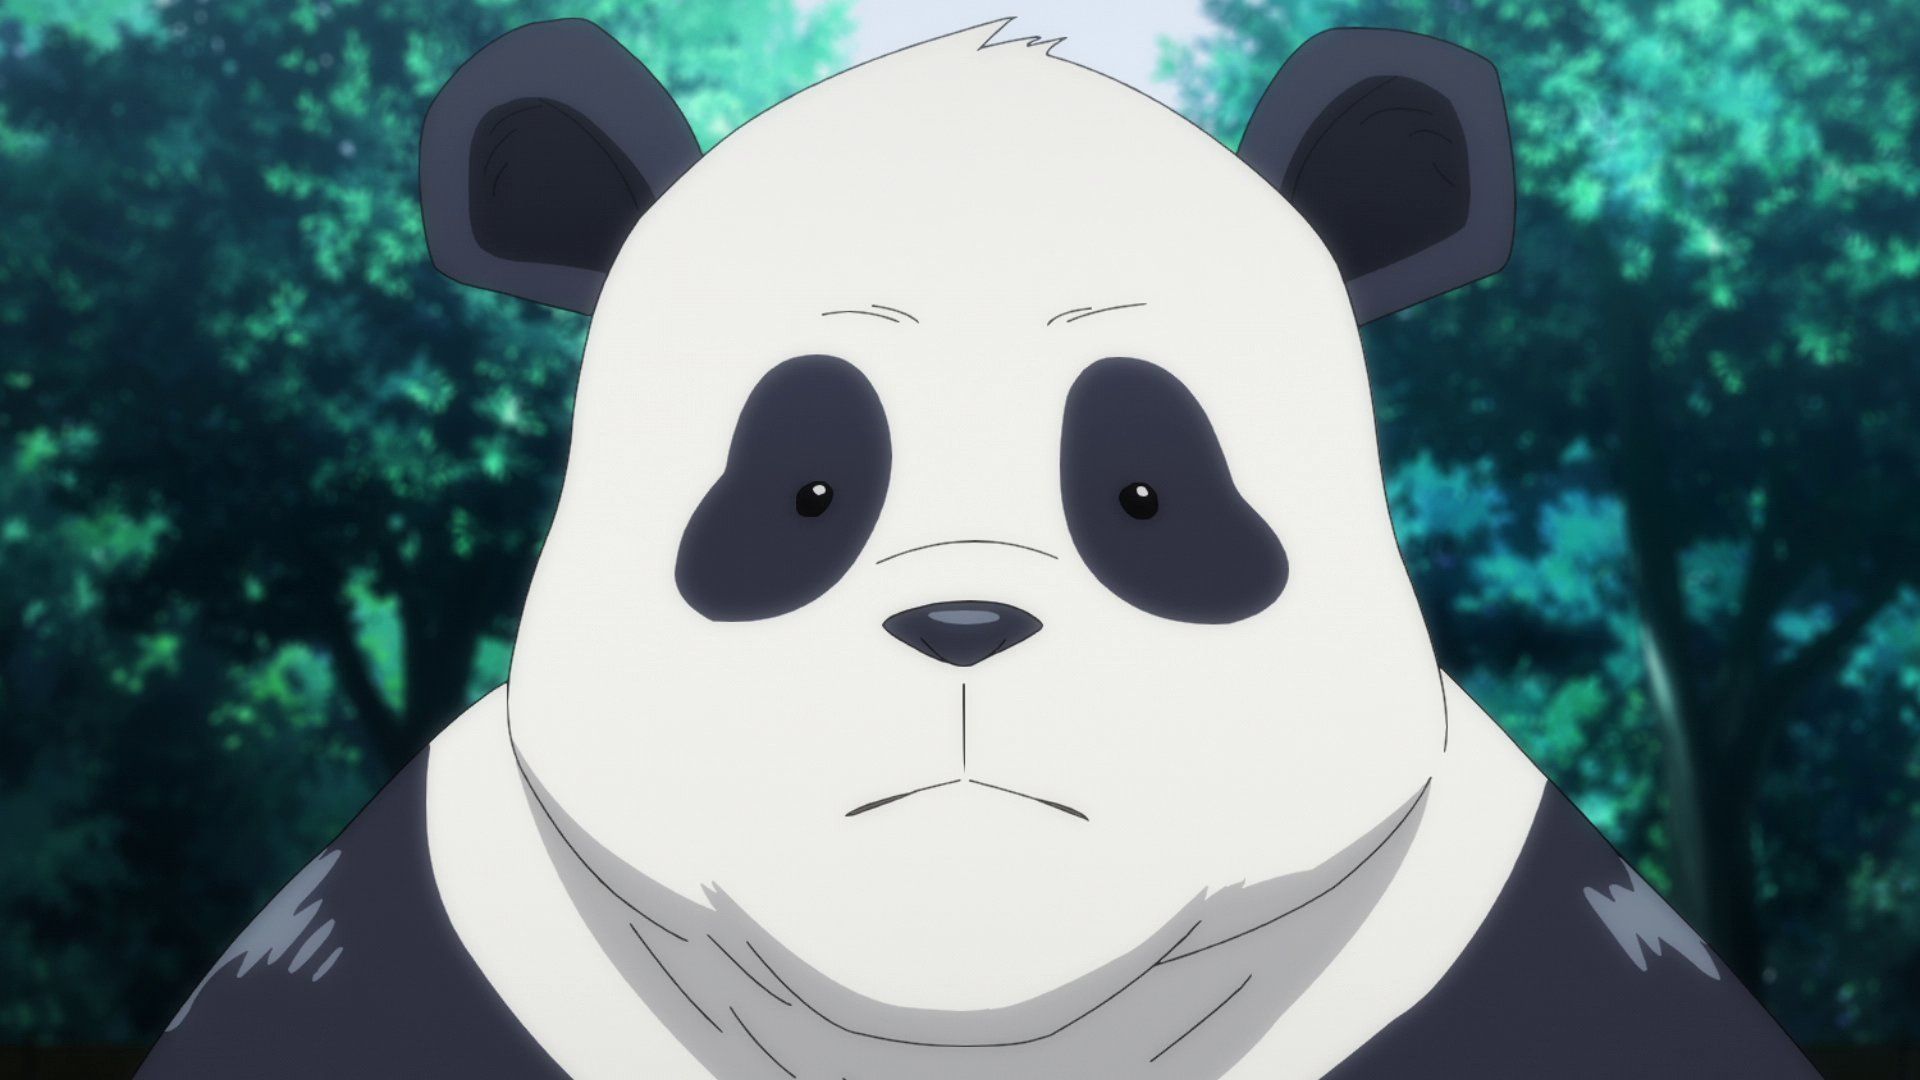 Anime Trending watch Jujutsu Kaisen for the panda